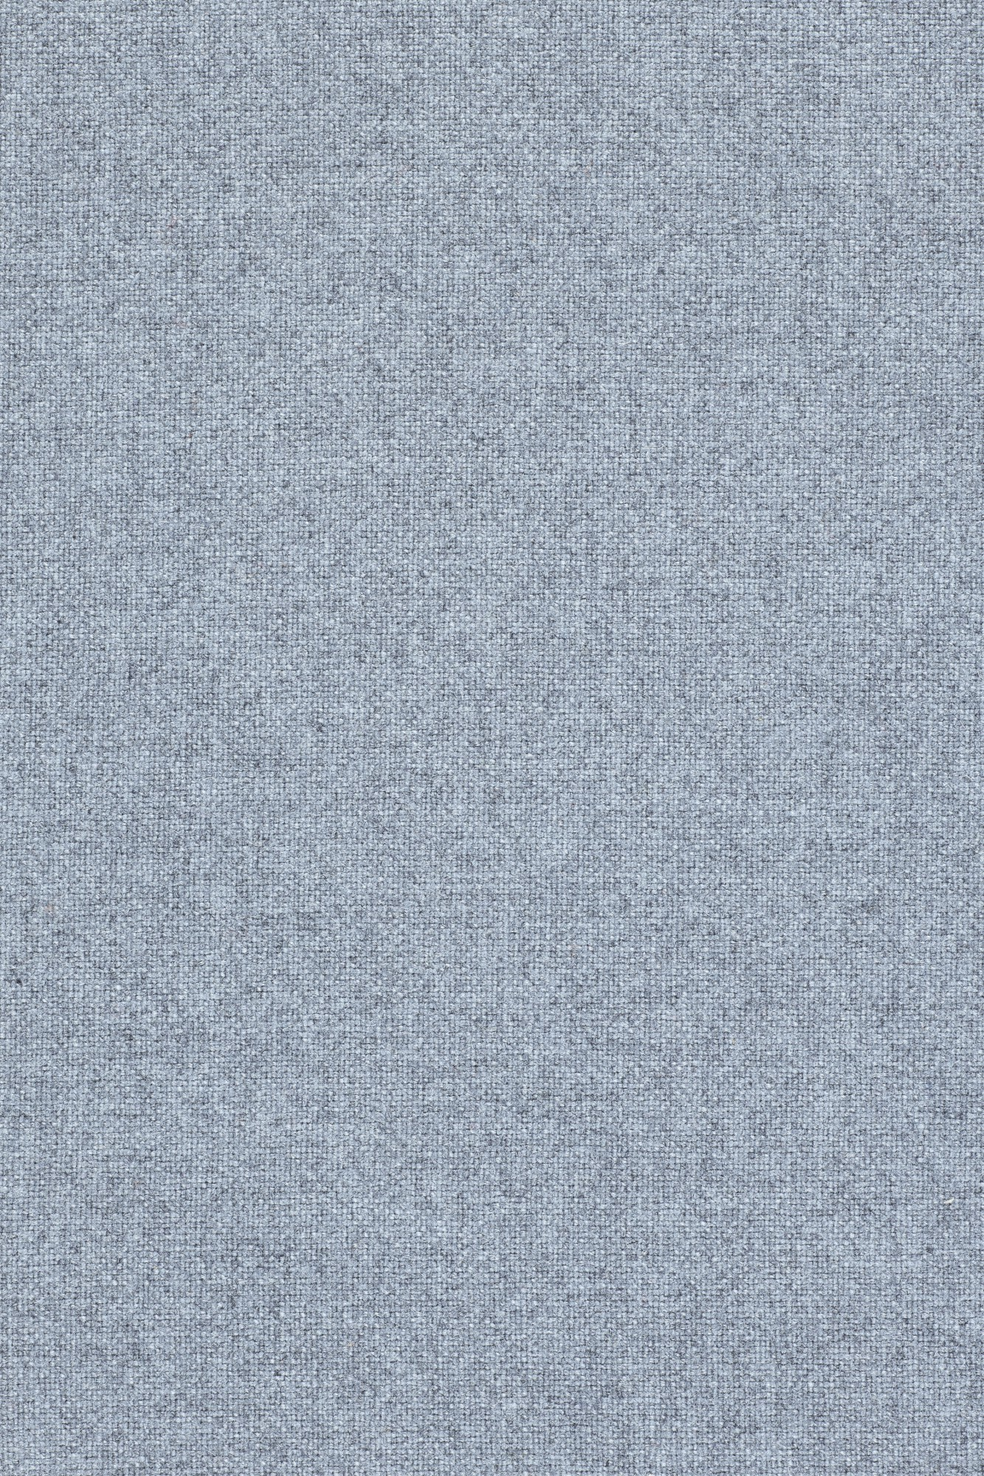 Fabric sample Tonica 2 723 blue